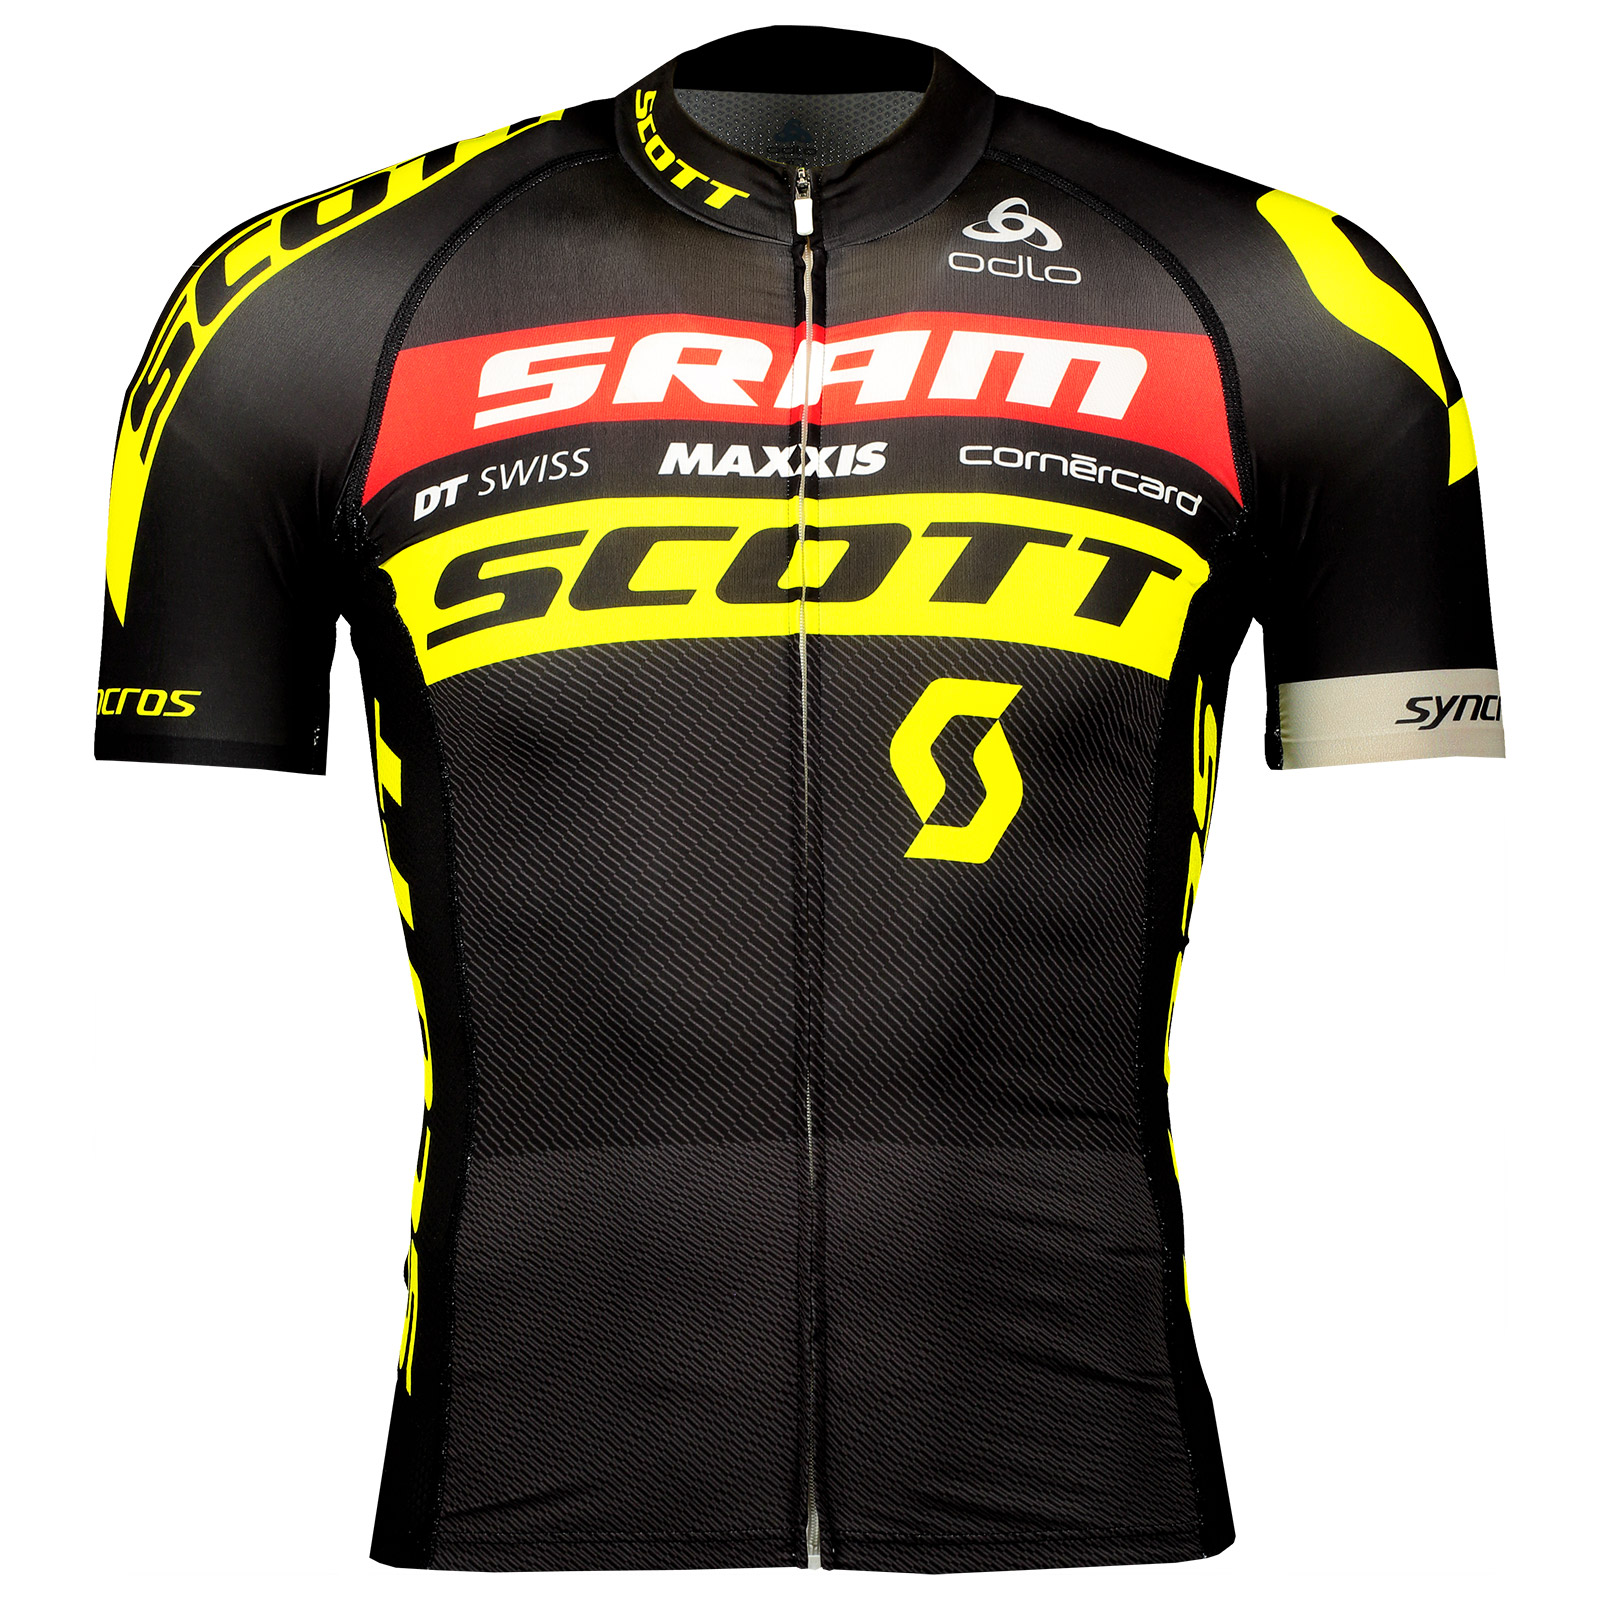 Equipment | SCOTT-SRAM MTB Racing Team